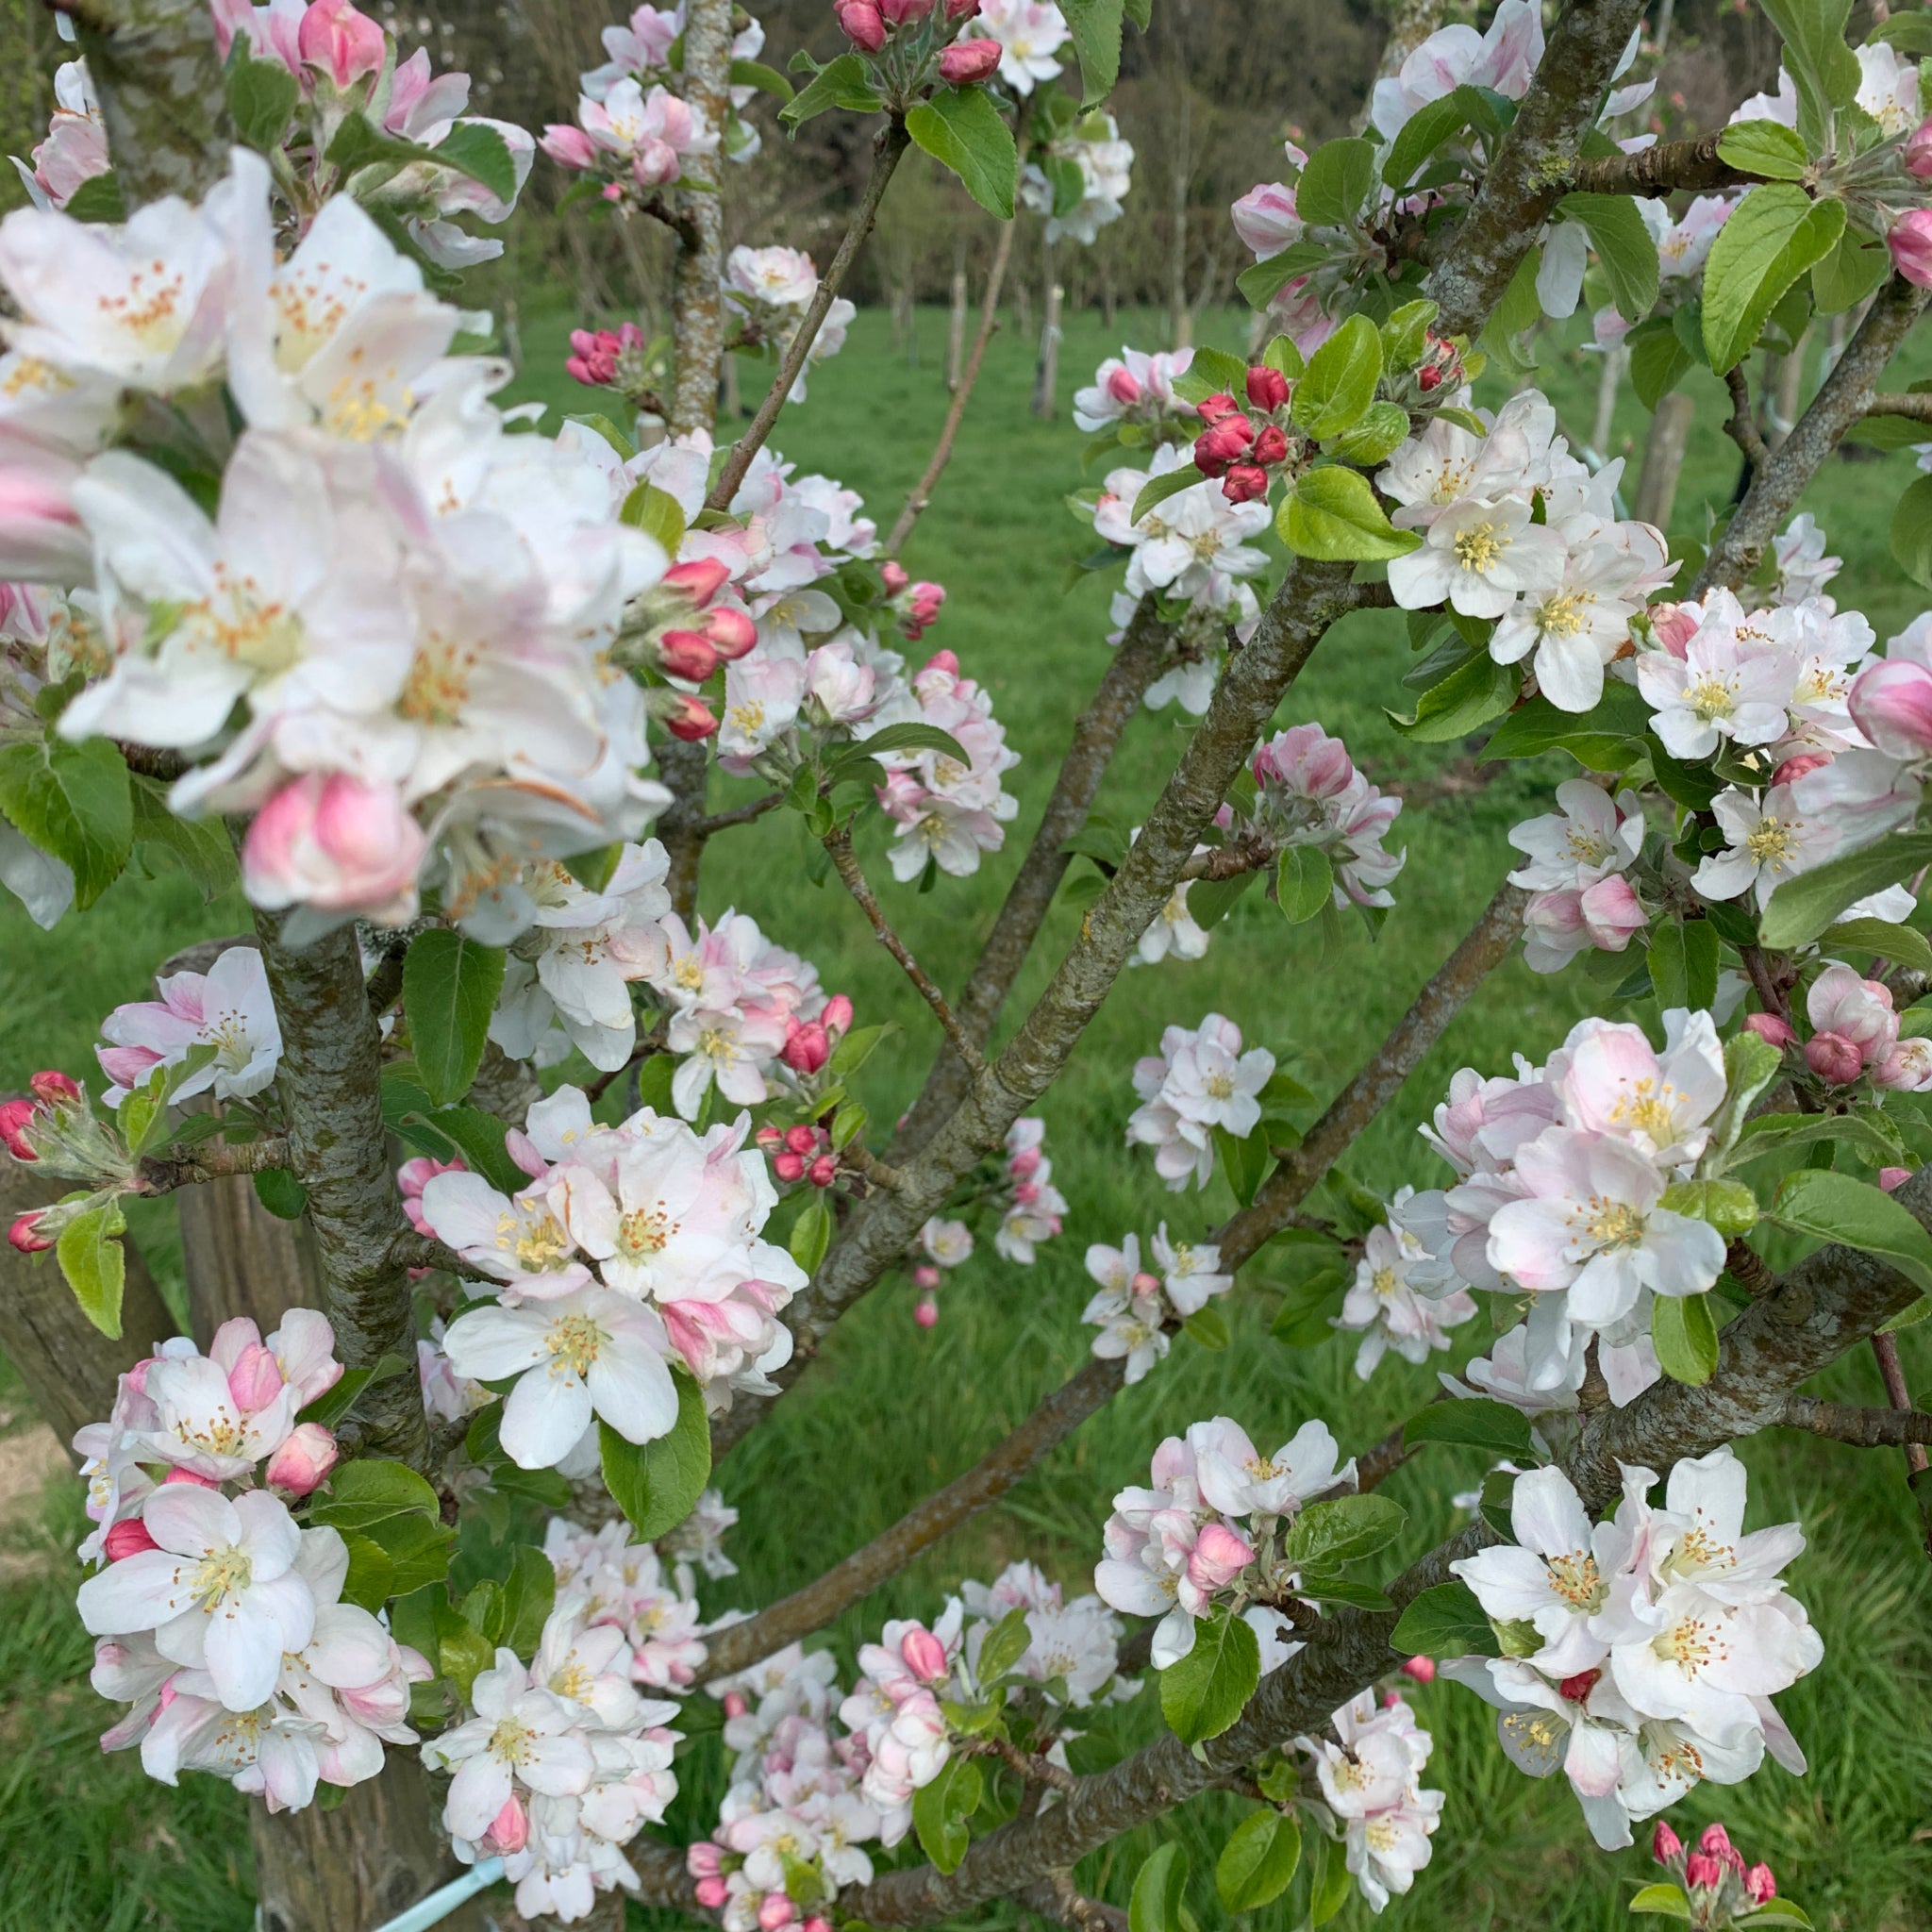 Kretchmer's Surprise apple tree blossom